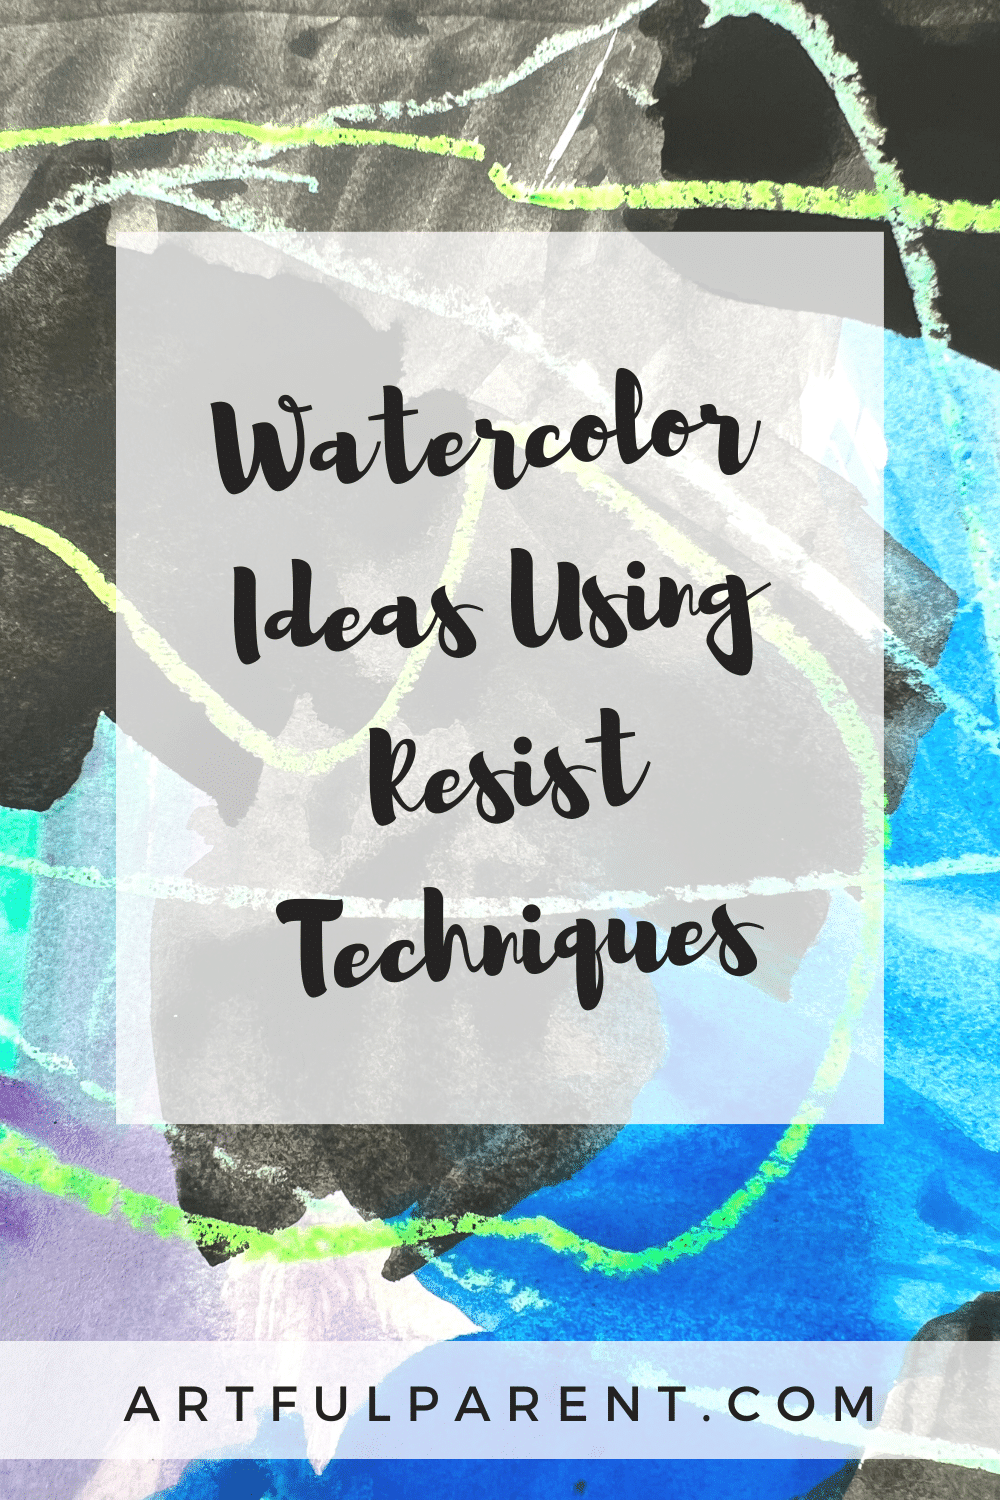 5 Easy Watercolor Ideas Using Resist Techniques